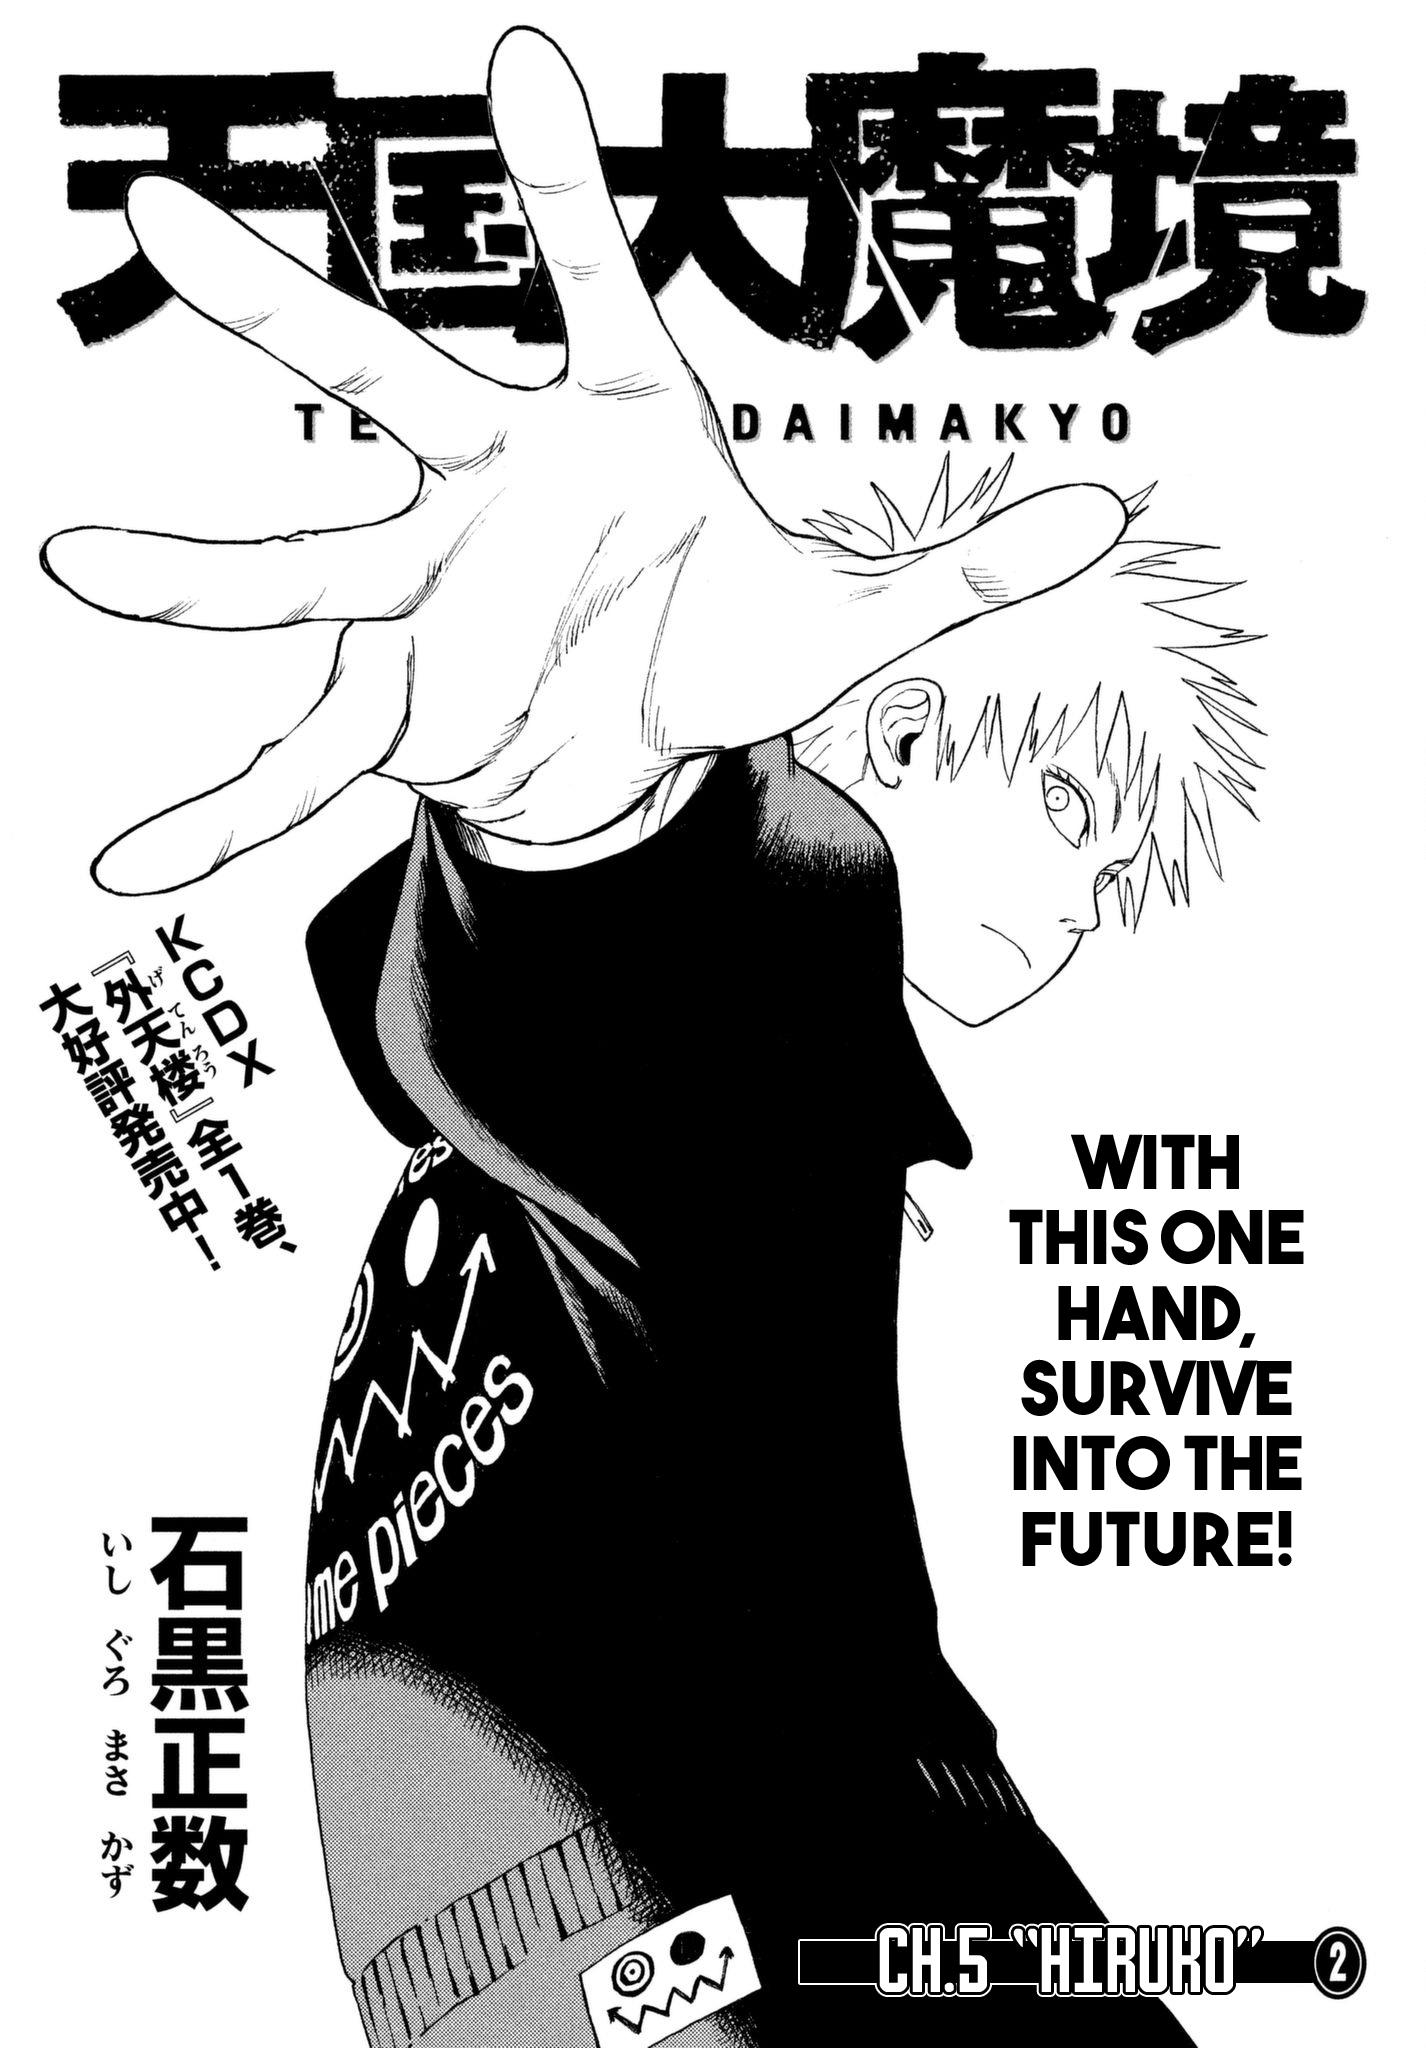 Read Tengoku Daimakyou Vol.1 Chapter 3: Kiruko (Lq) on Mangakakalot